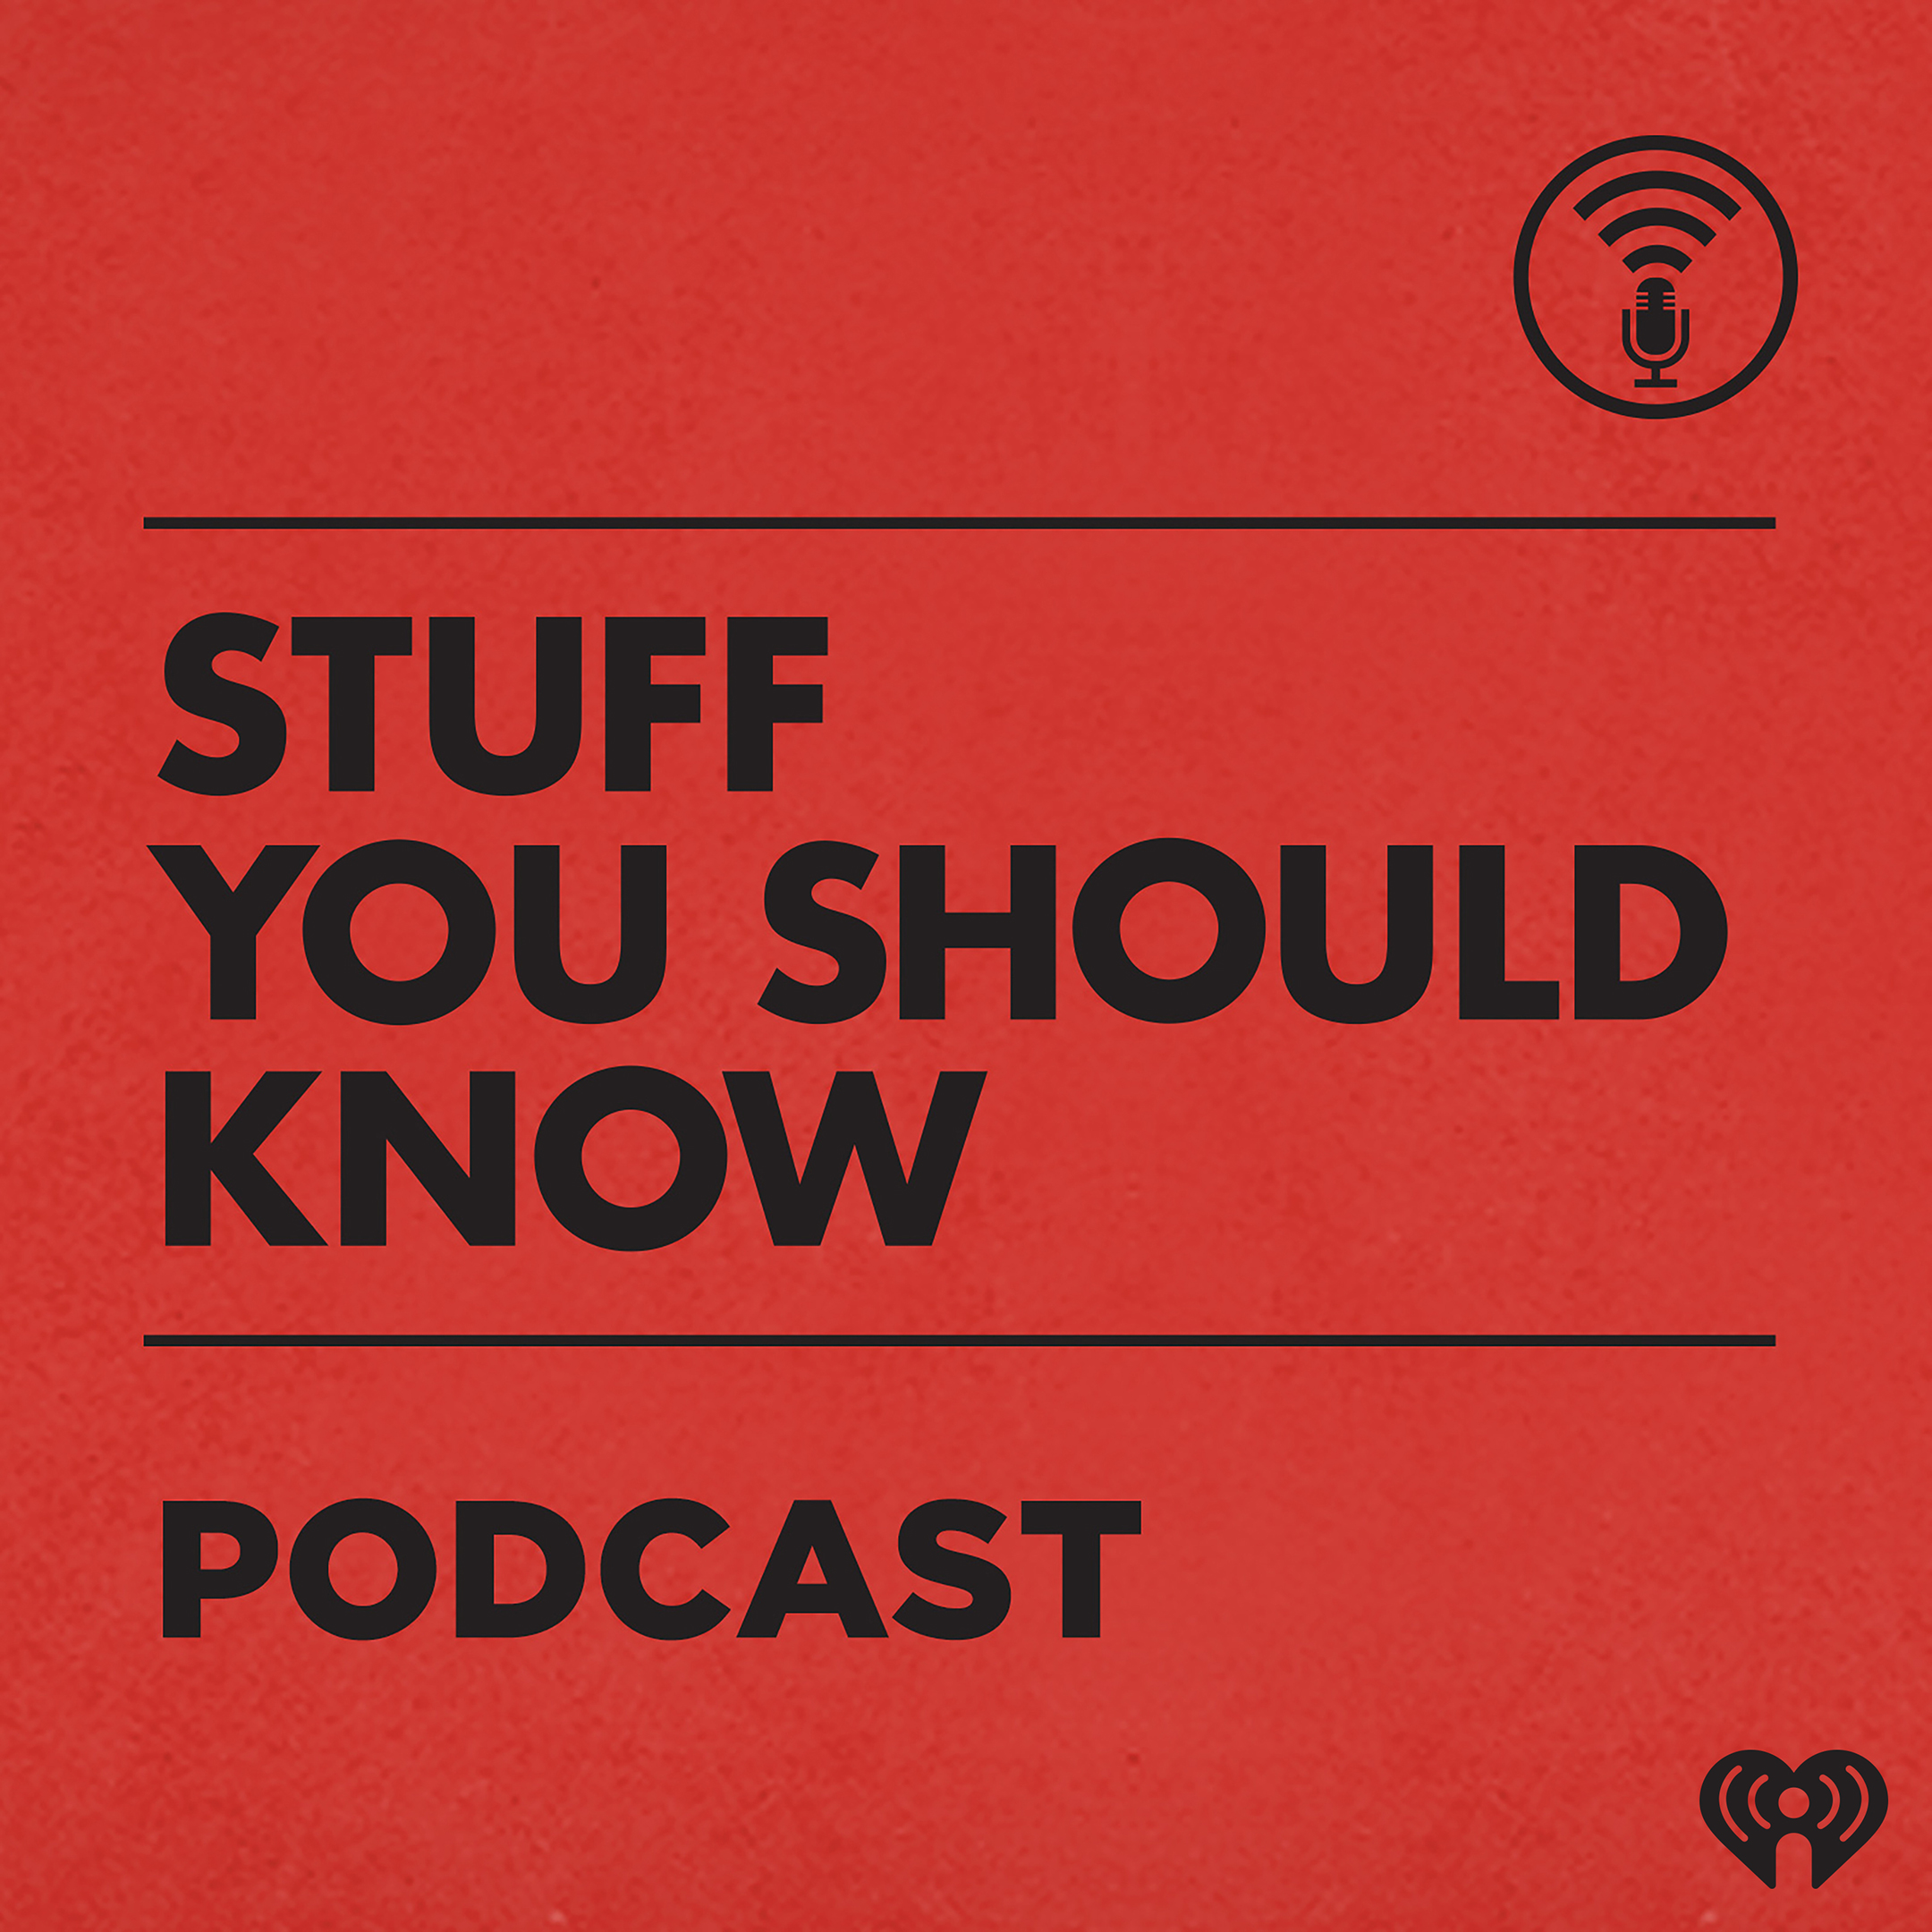 edu podcasts stuff you should know logo